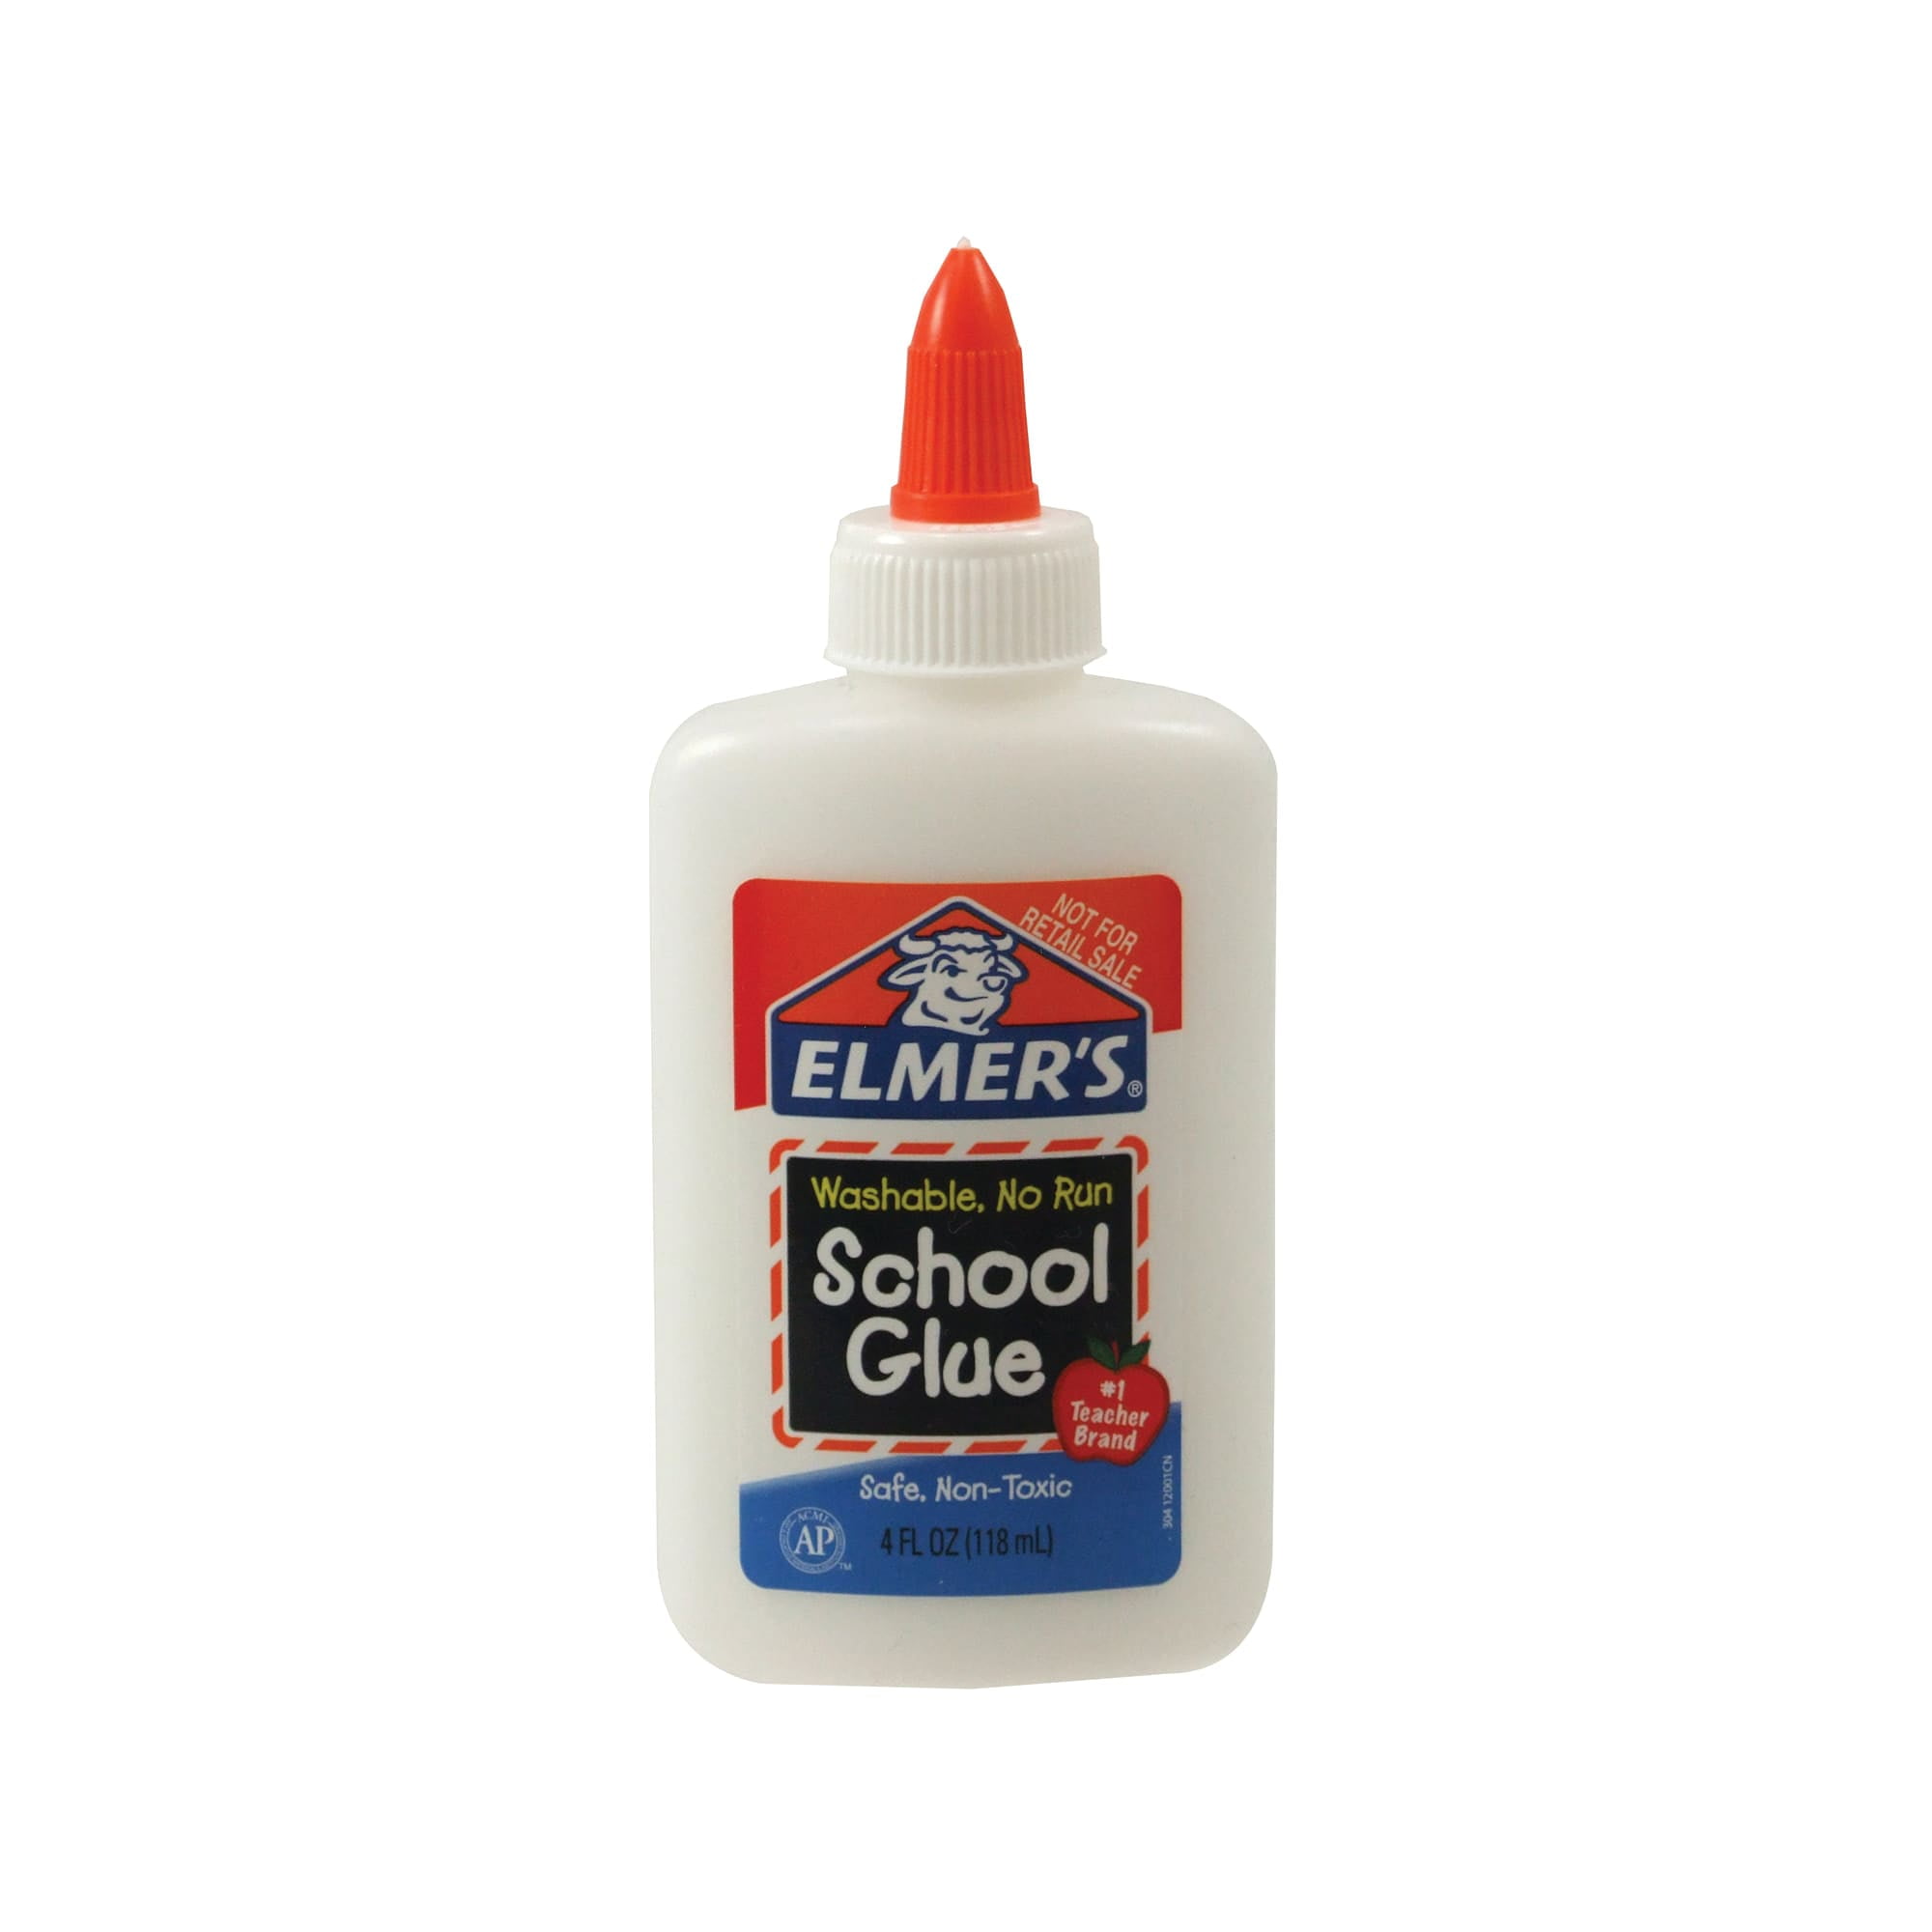 12 Packs: 4 ct. (48 total) Elmer's® CraftBond® Repositionable Glue Sticks 